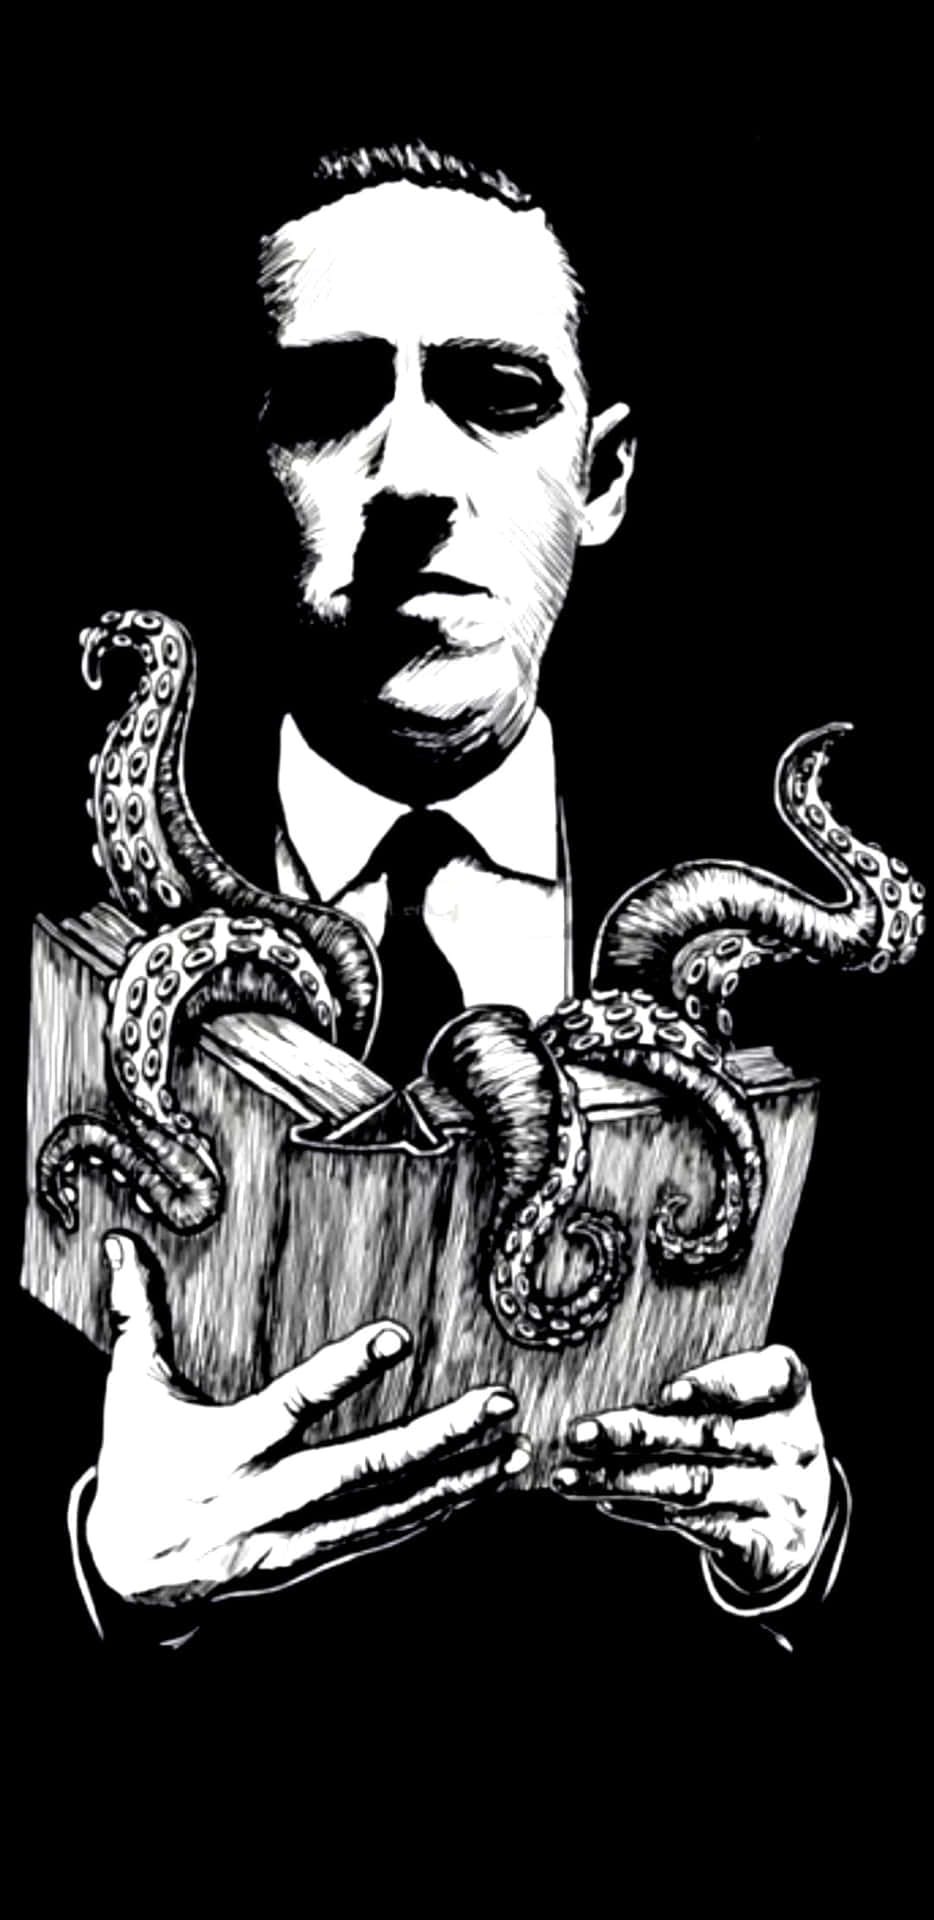 Step into the nightmarish world of H.P. Lovecraft